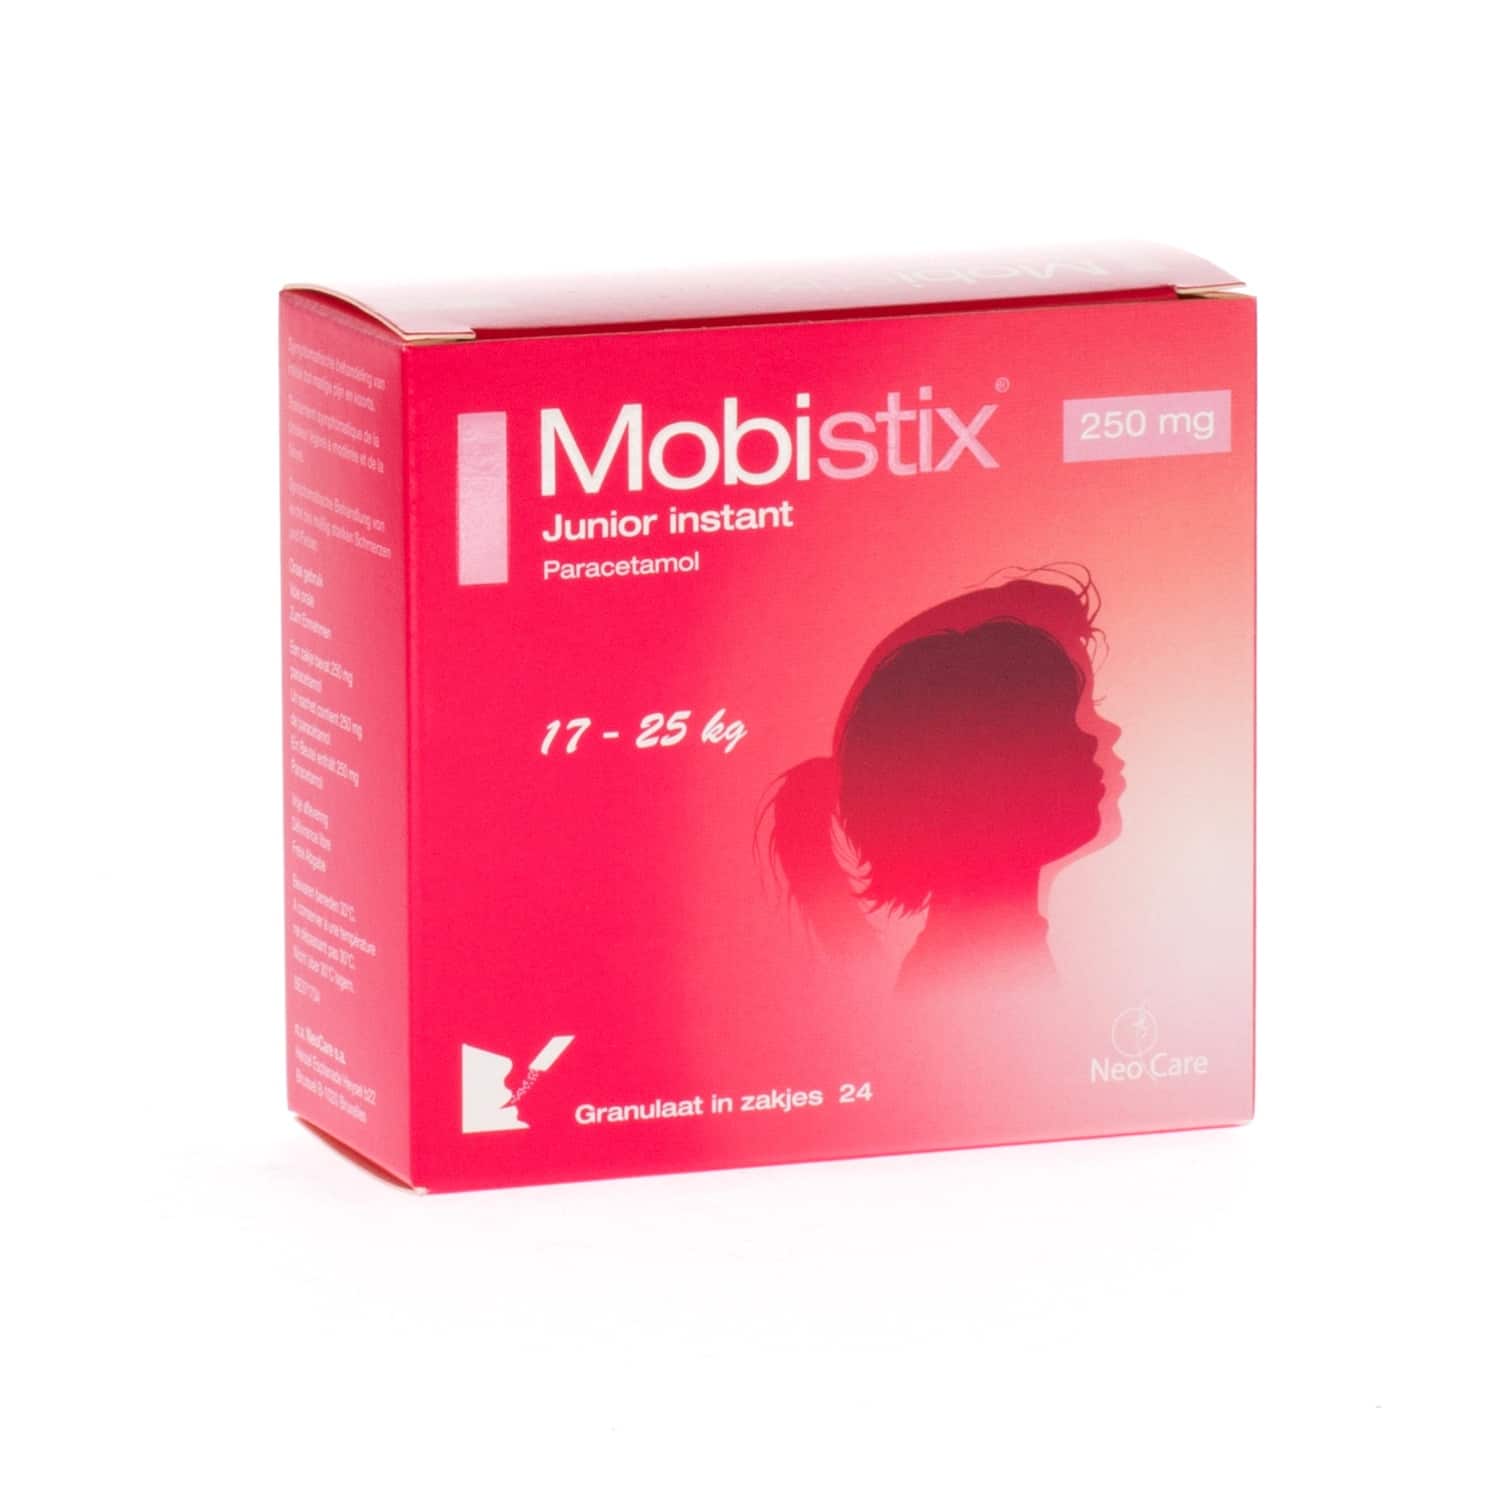 Mobistix Junior Instant 250 mg